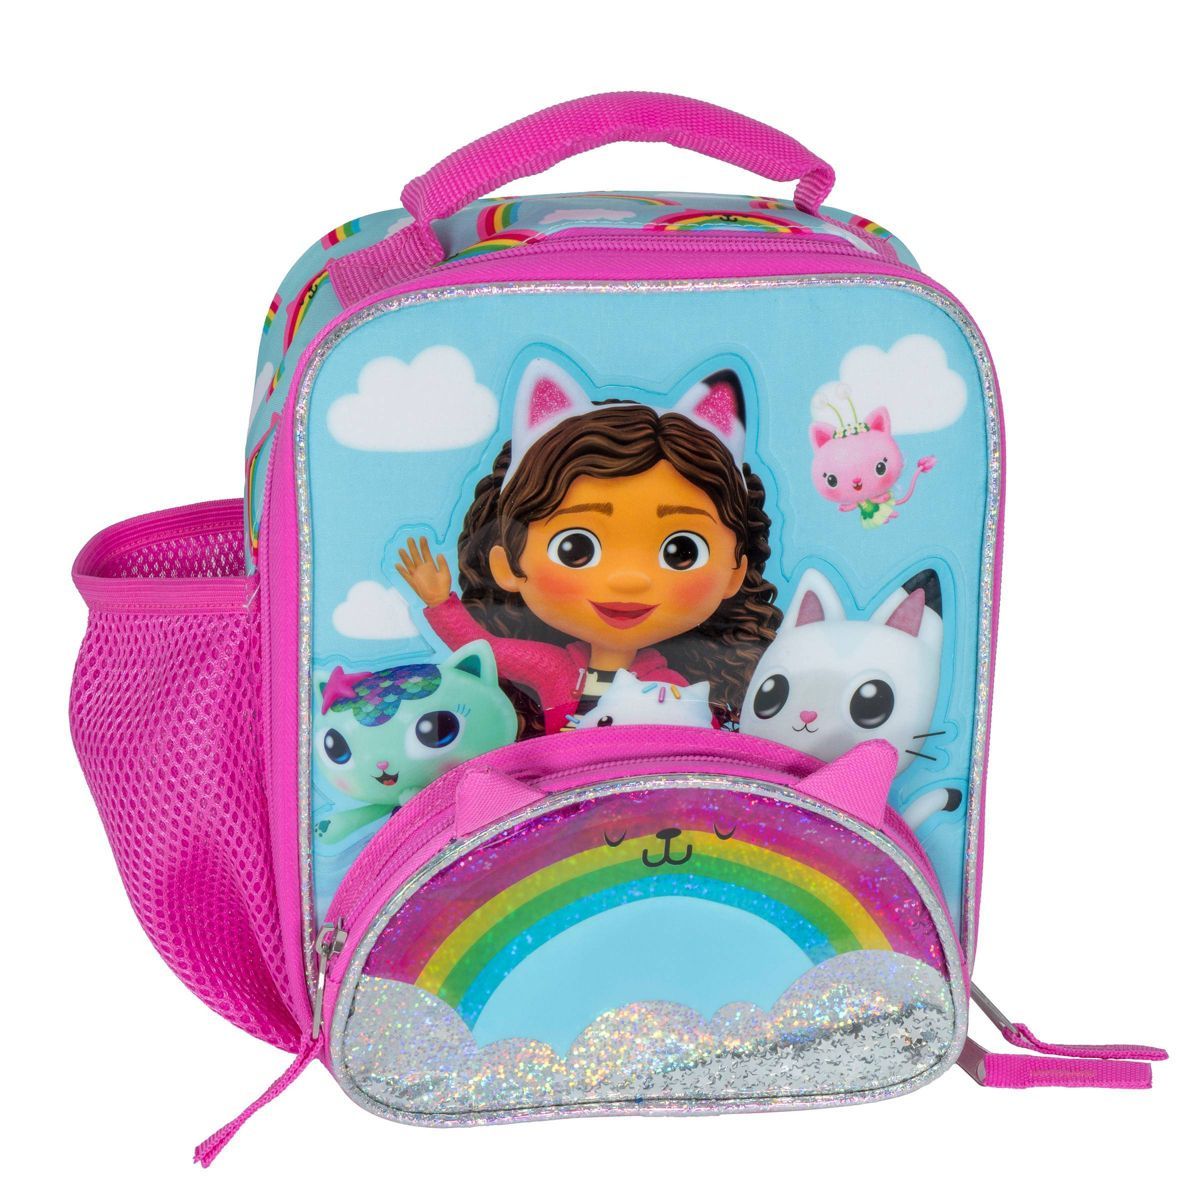 Gabby's Dollhouse Kids' Lunch Bag | Target